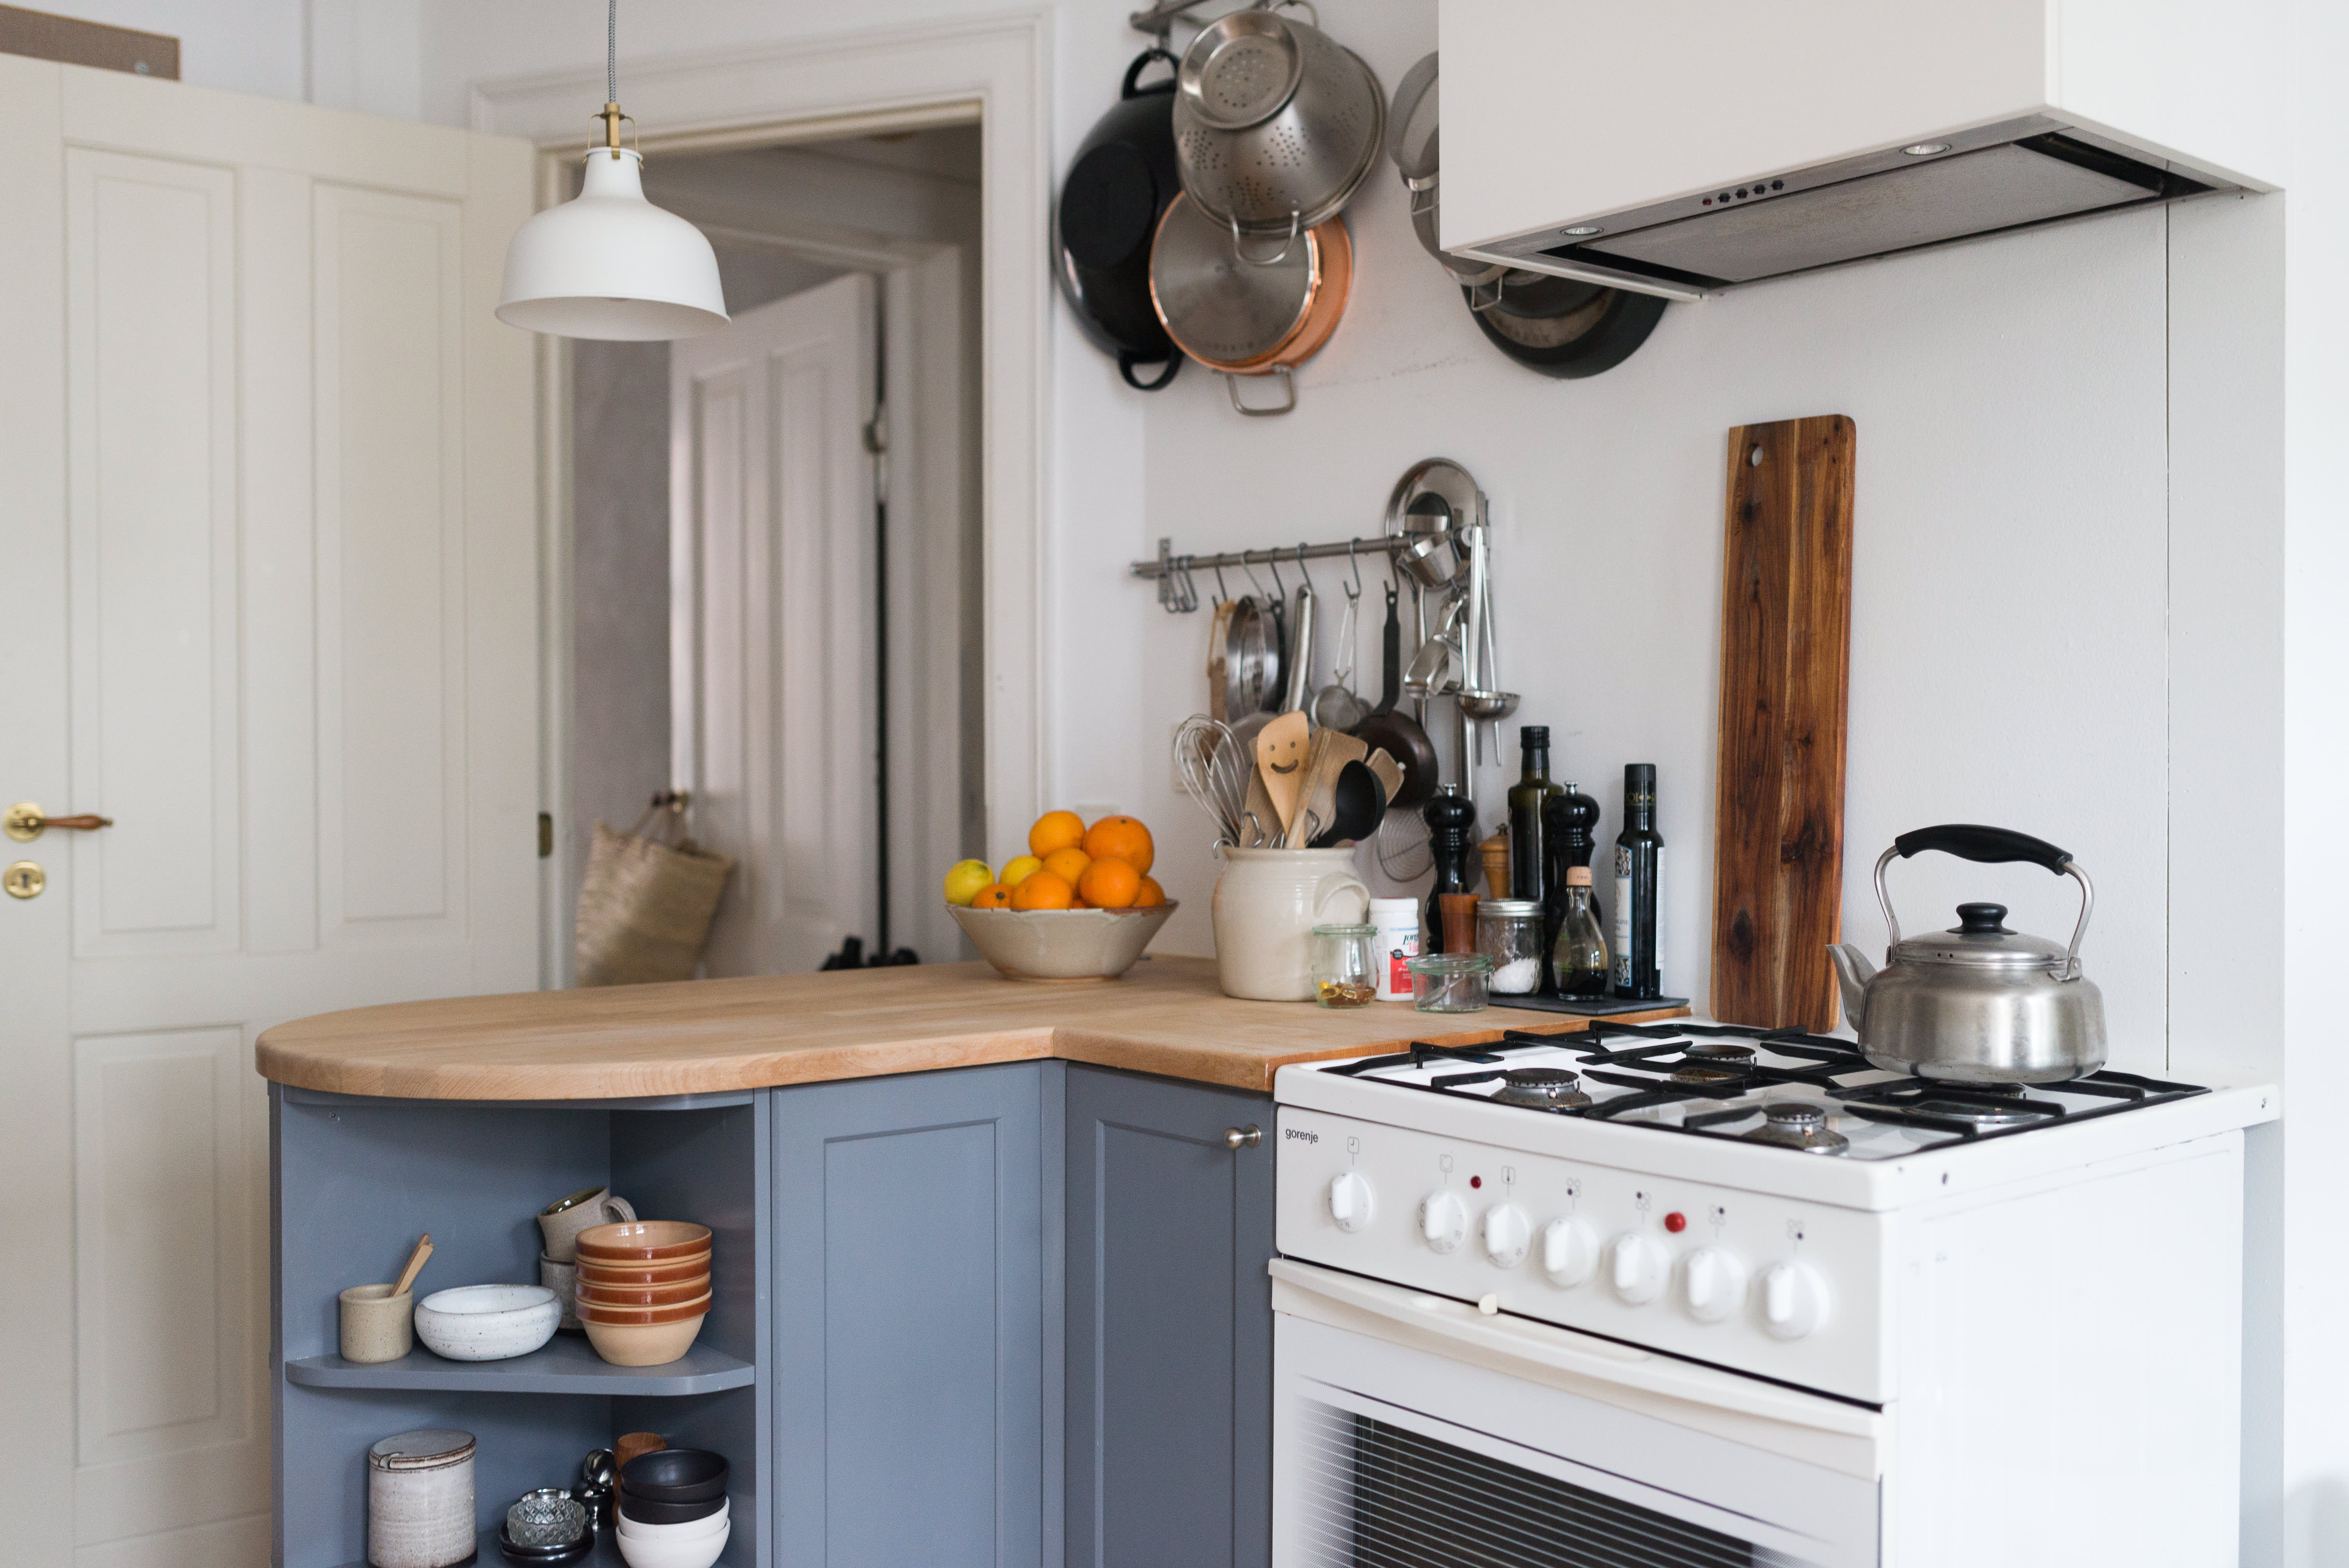 20 Best Small Kitchen Ideas Tiny Kitchen Design And Decor ...